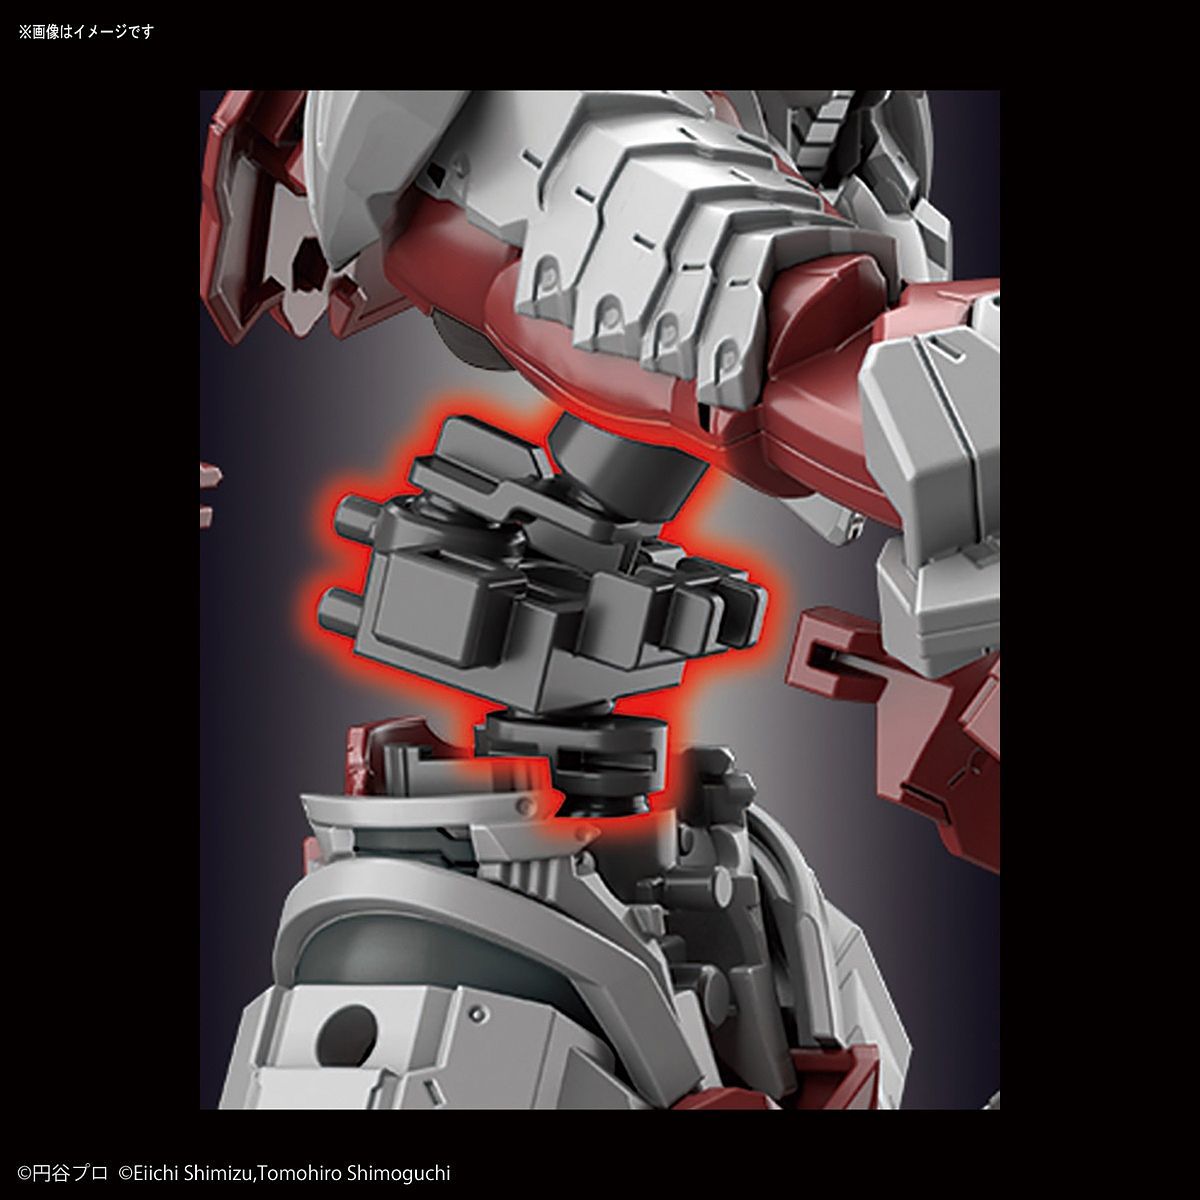 Figure-rise Standard - Ultraman Suit Ver 7.5 [Action]